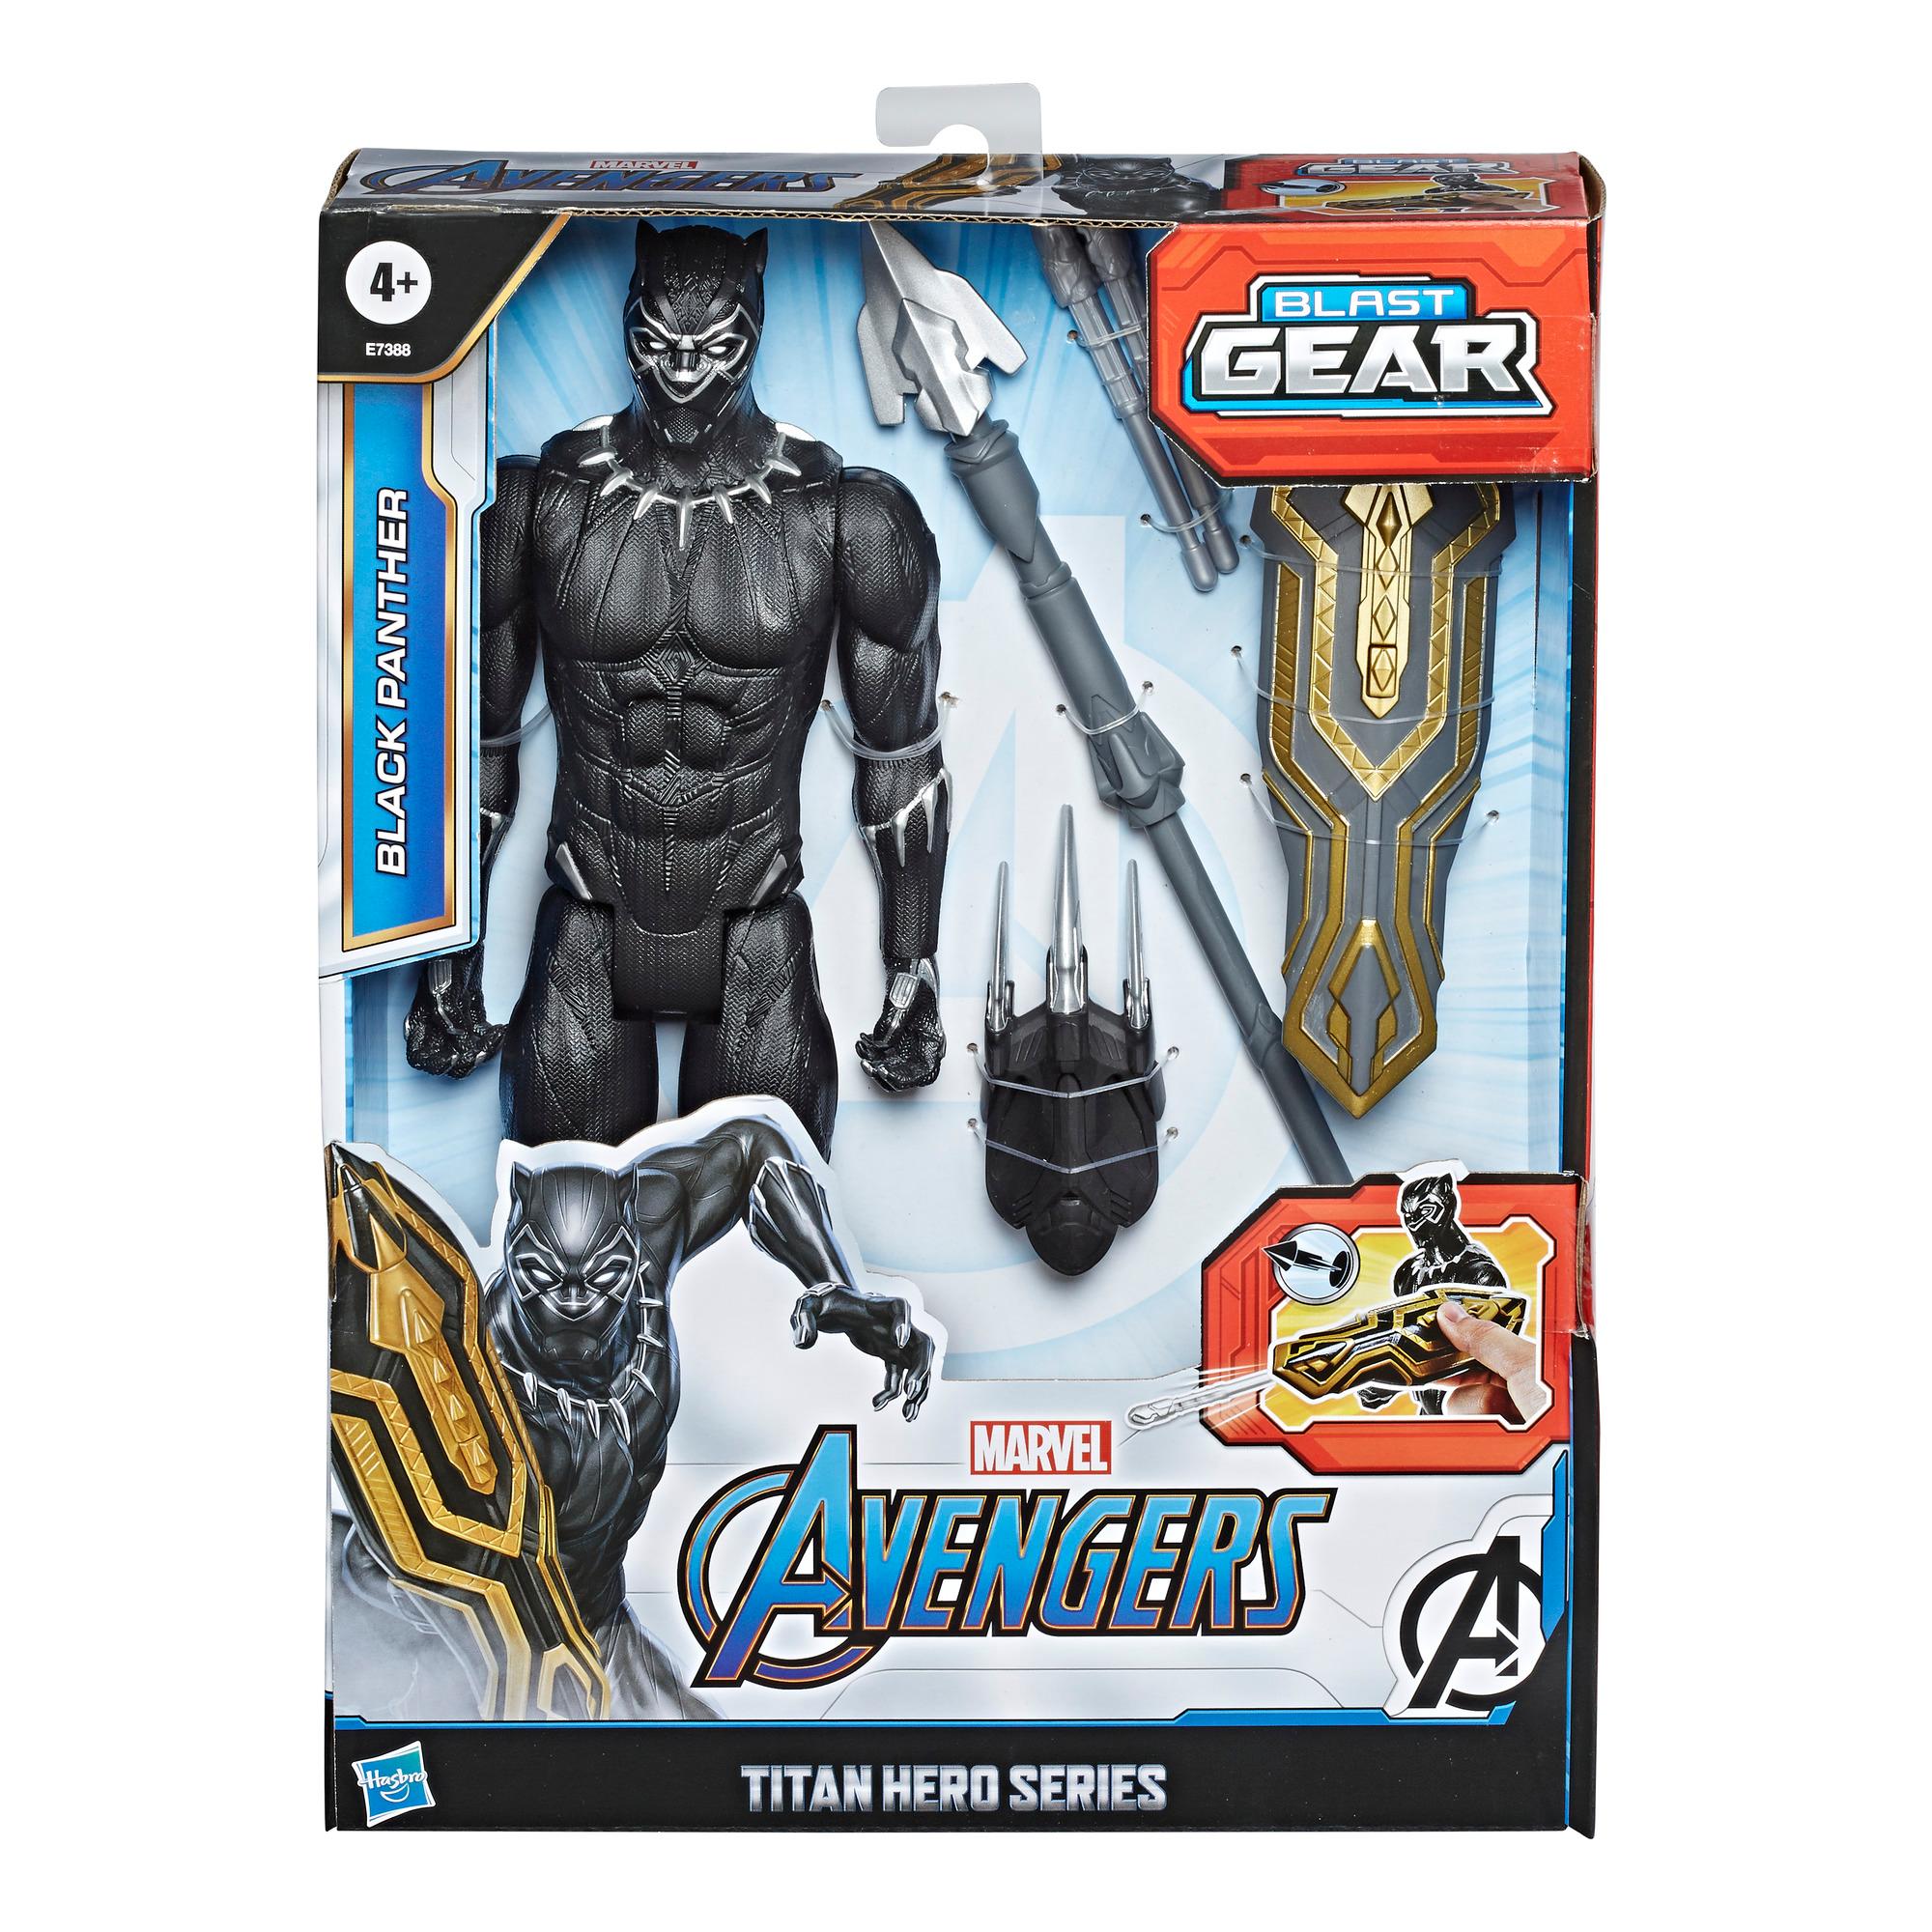 E7876 Marvel Avengers Titan Hero Series Black Panther 12-Inch Action Figure